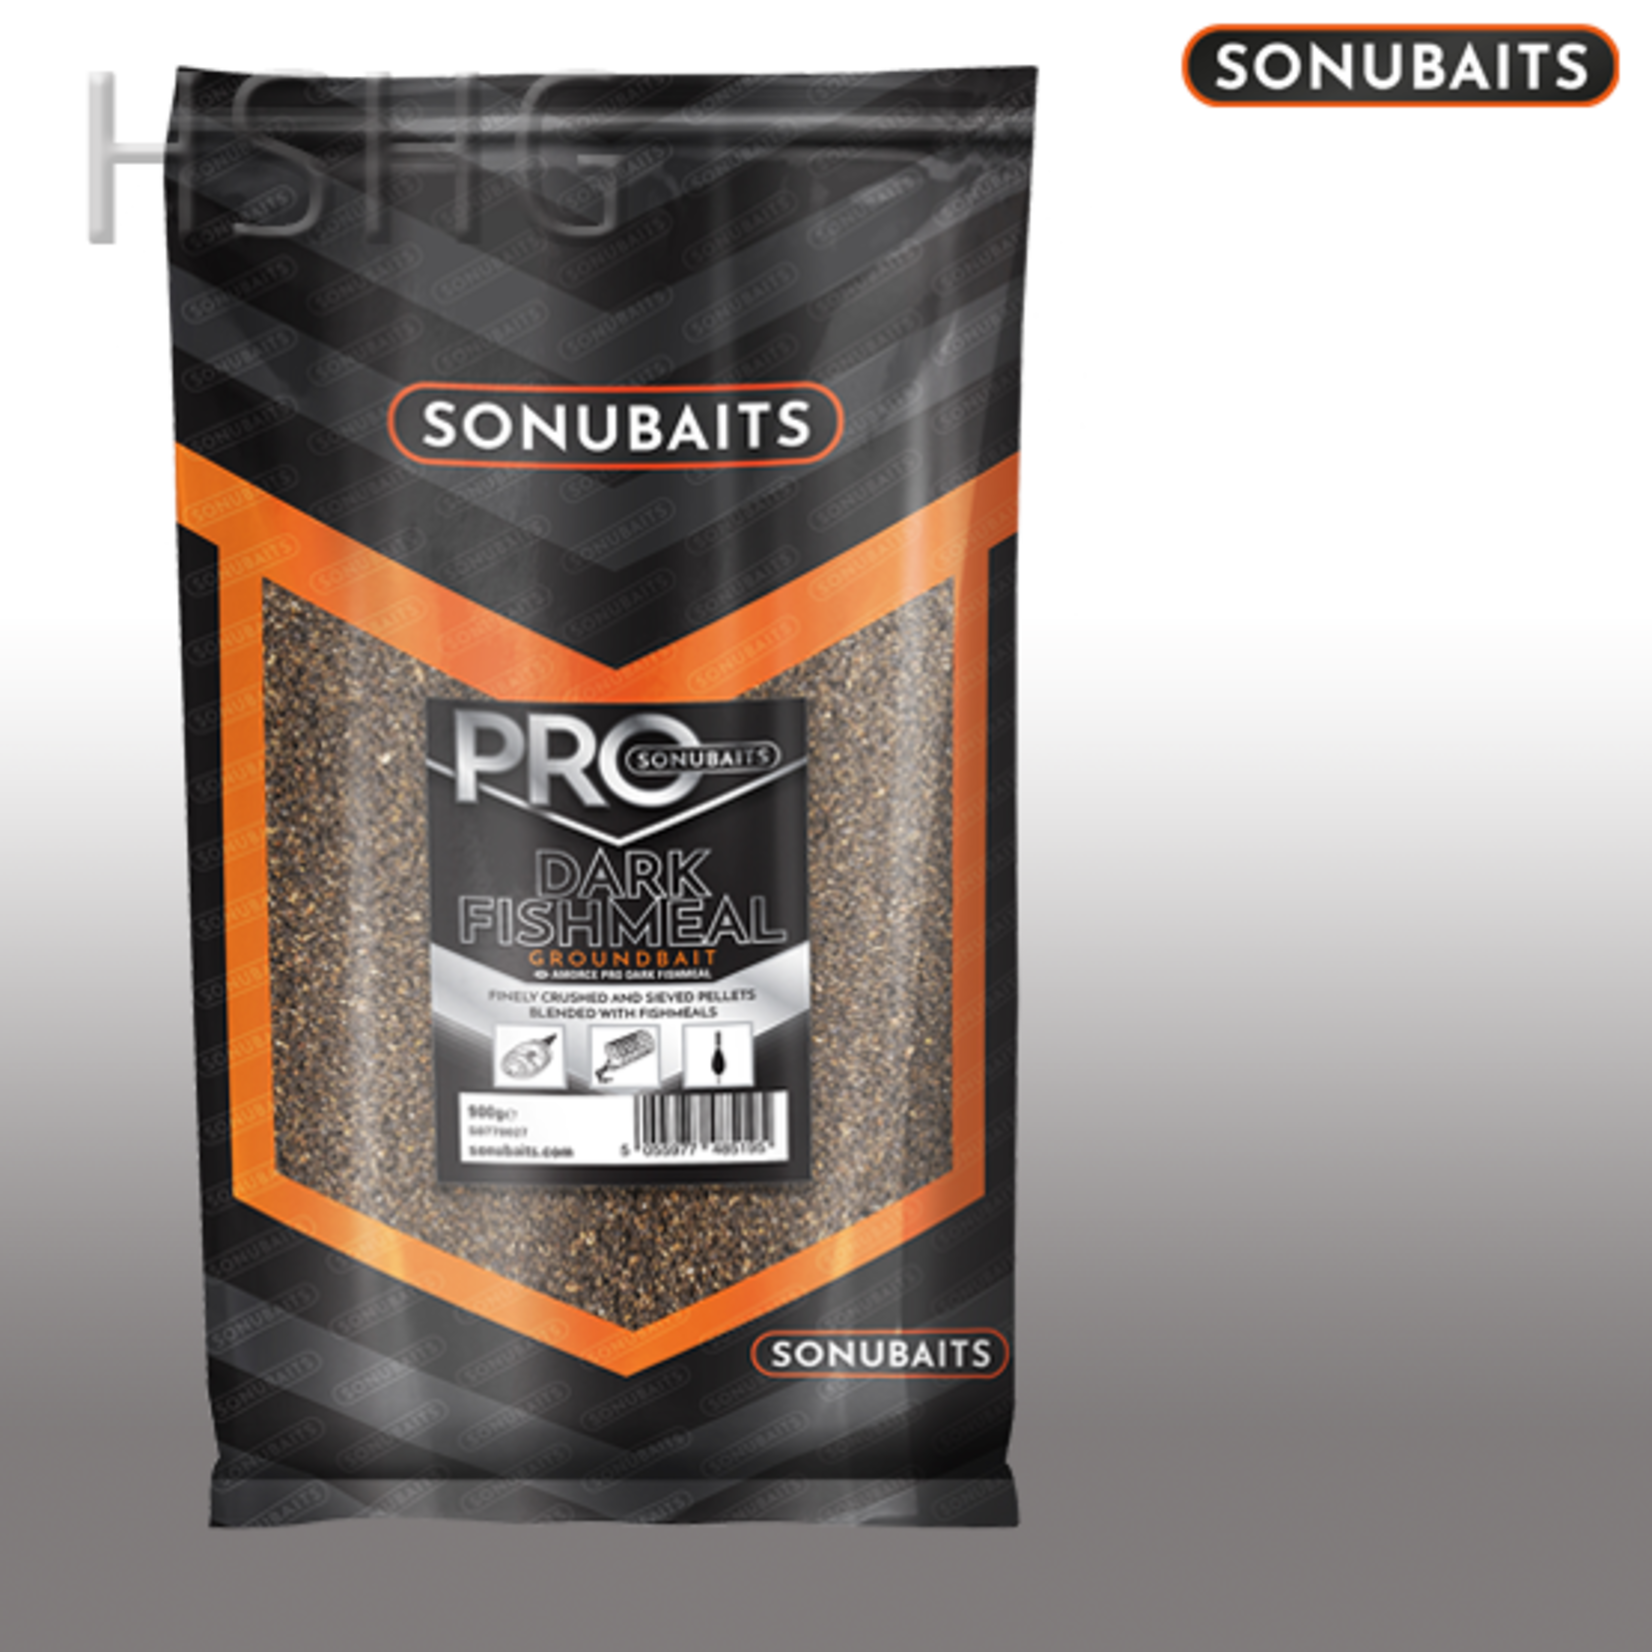 Sonubaits Sonubaits Pro Dark Fishmeal Groundbait 900Gr.